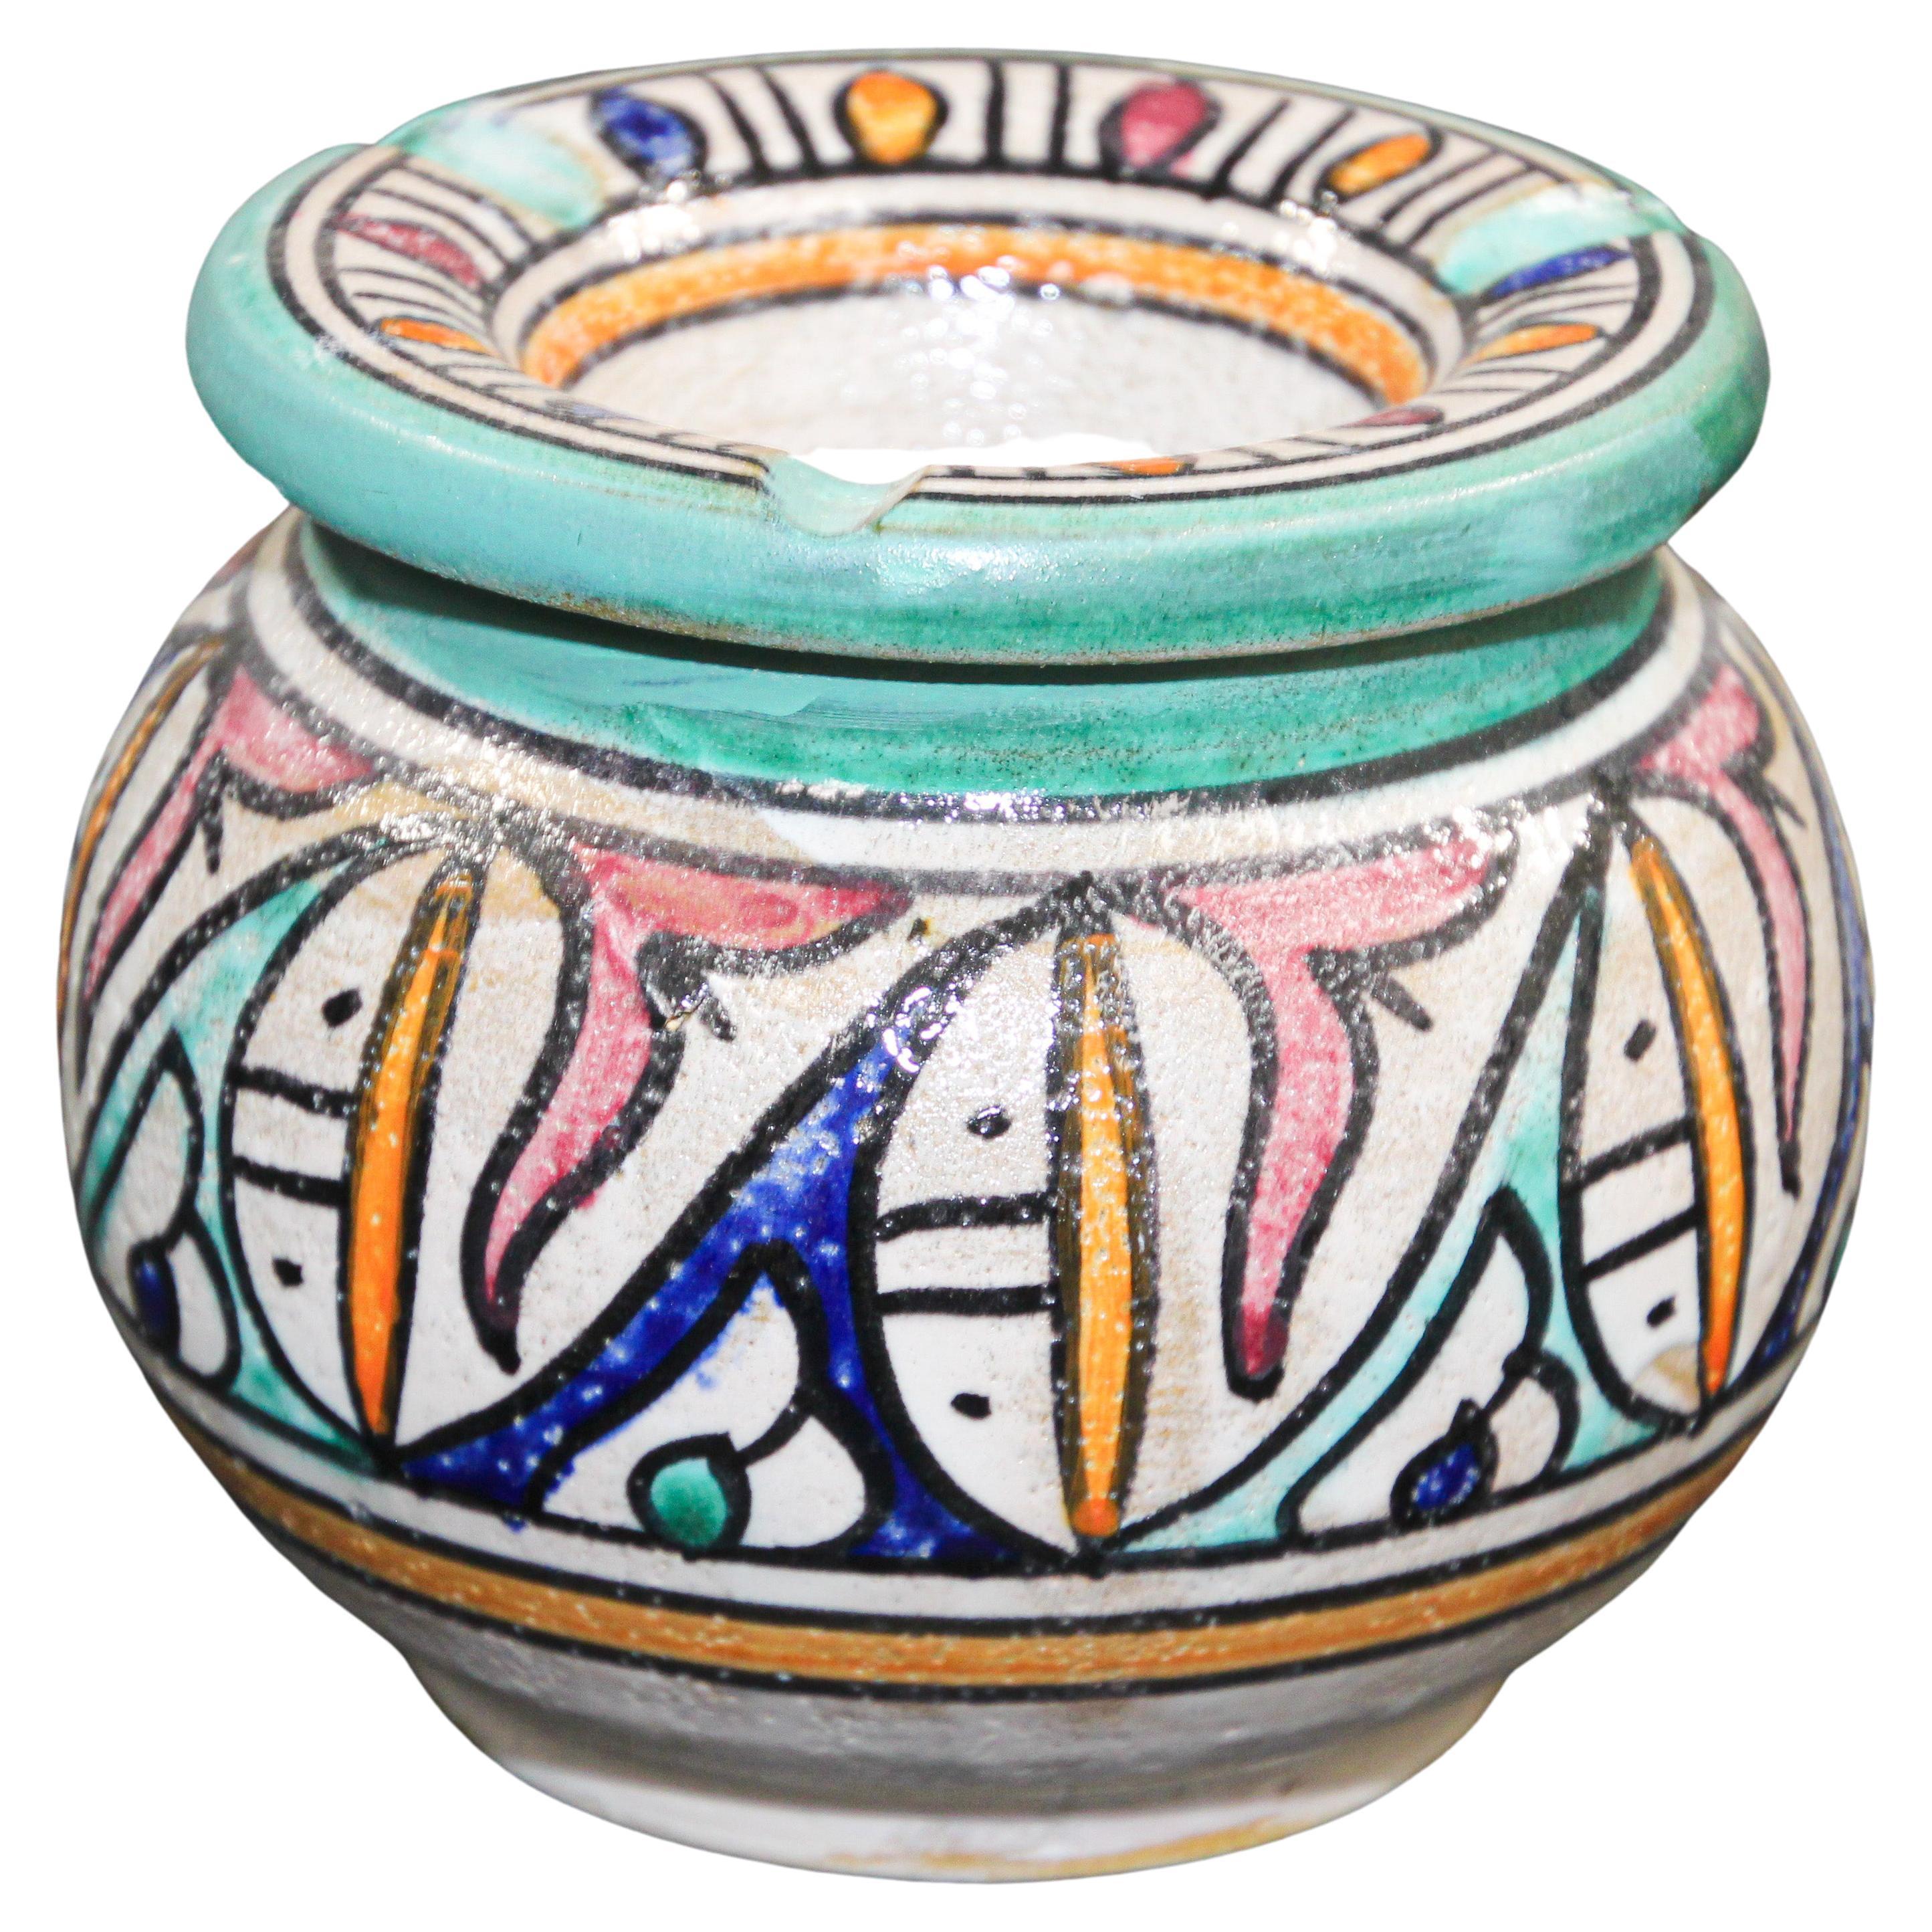 Vintage Ceramic Ashtray from Fez Morocco